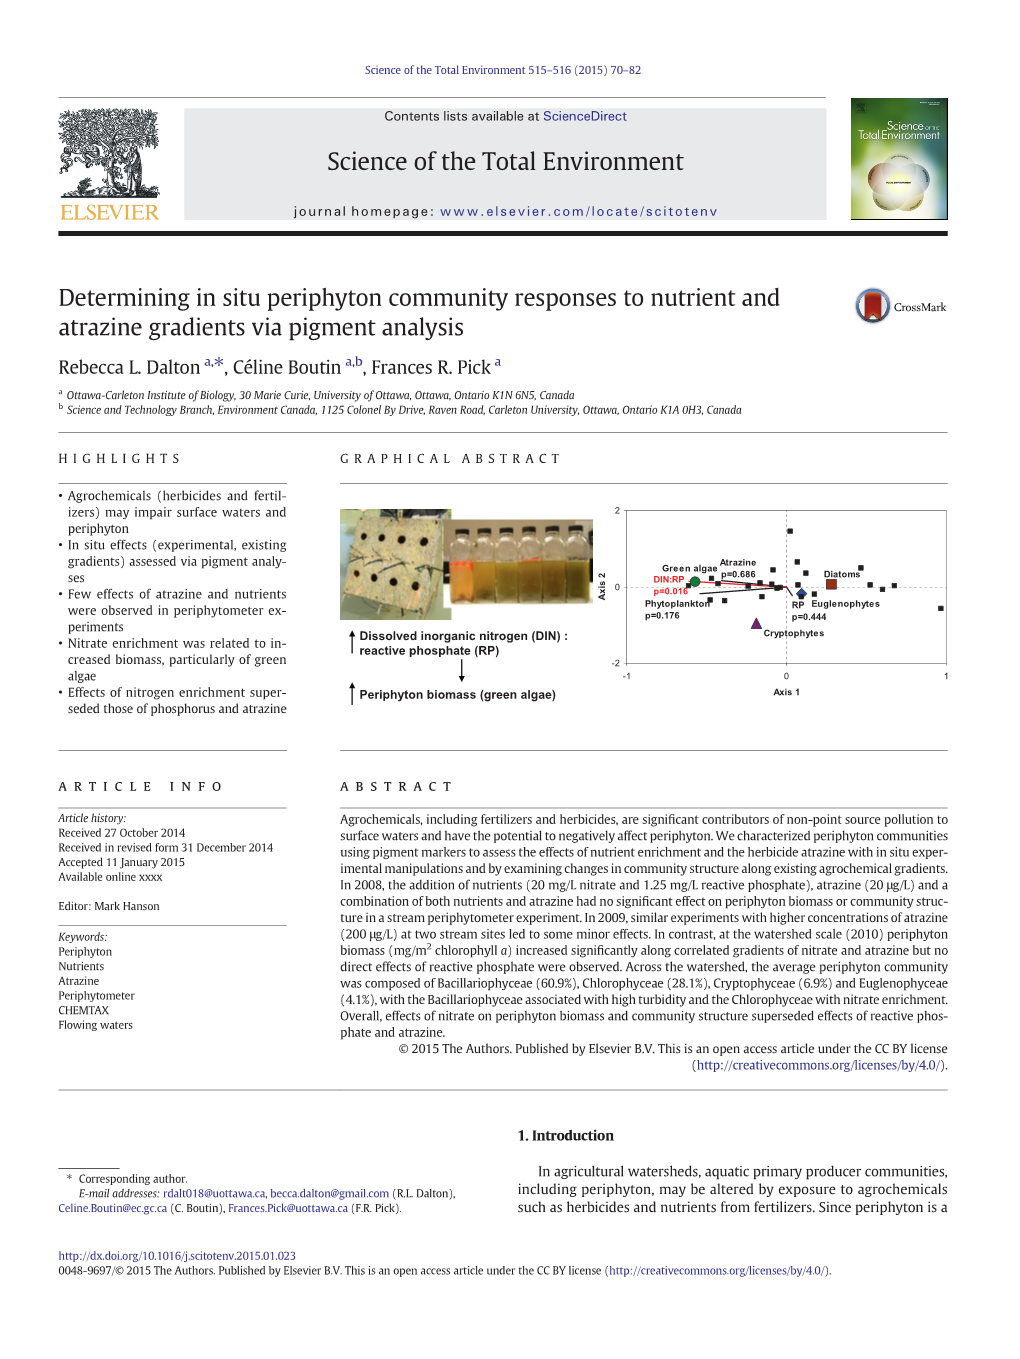 Determining in Situ Periphyton Community Responses to Nutrient and Atrazine Gradients Via Pigment Analysis